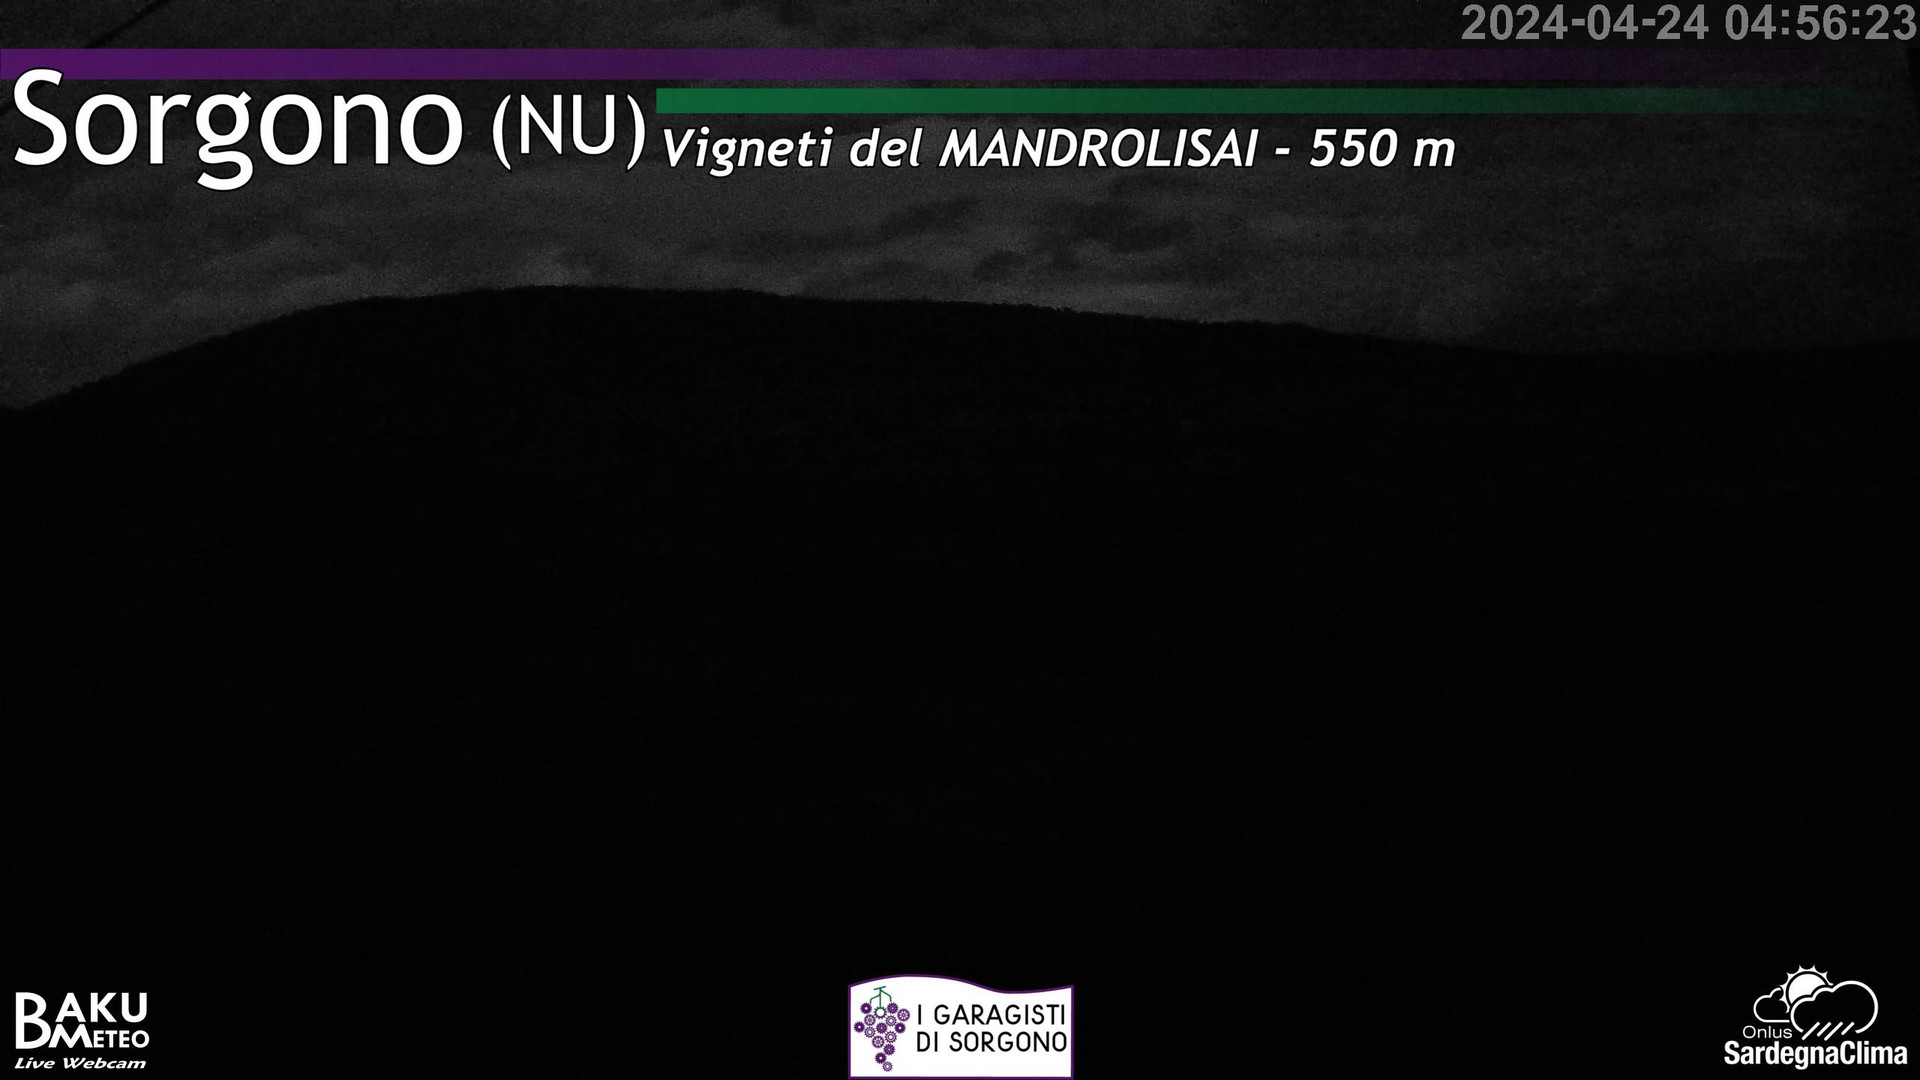 time-lapse frame, Sorgono webcam